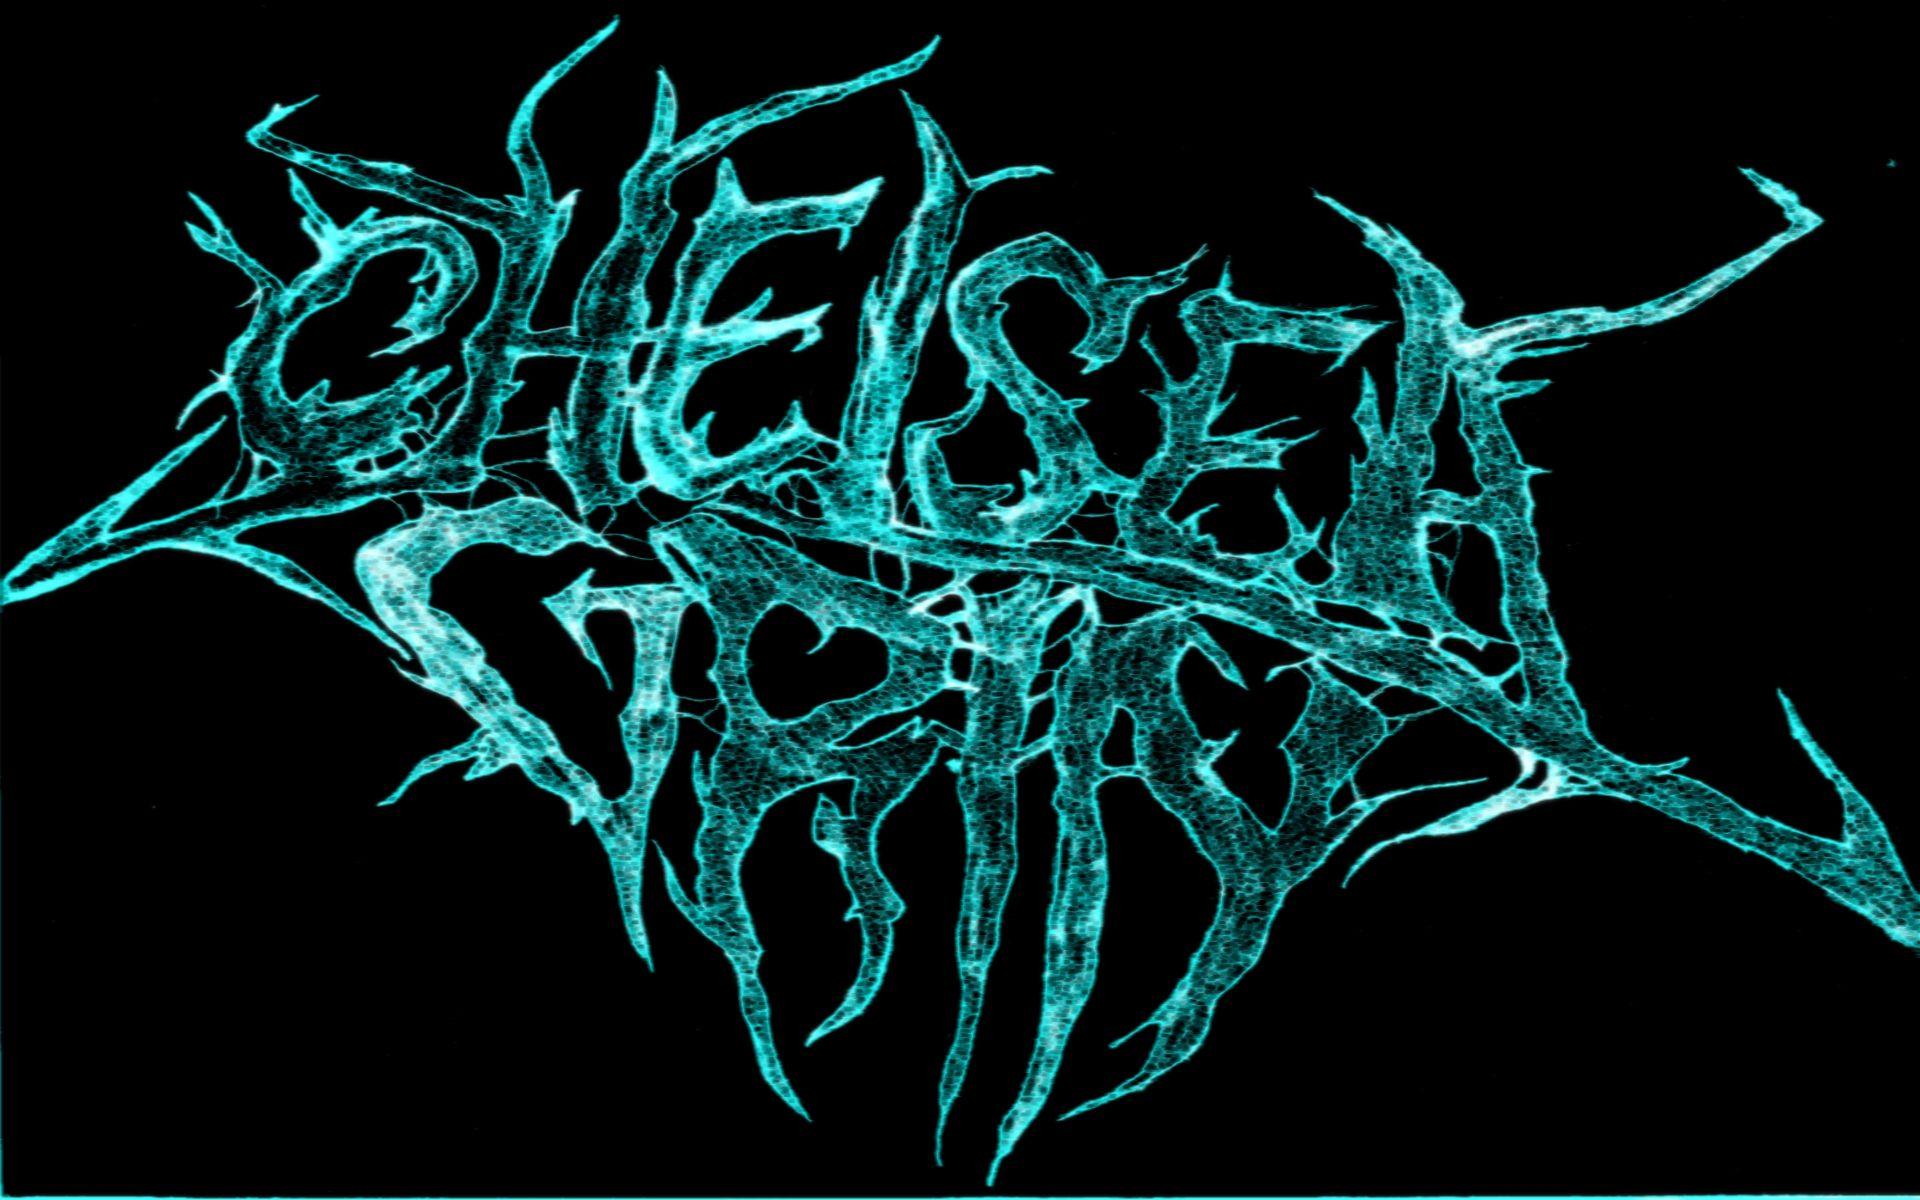 Chelsea Grin. Deathcore Metal Bands & Lyrics